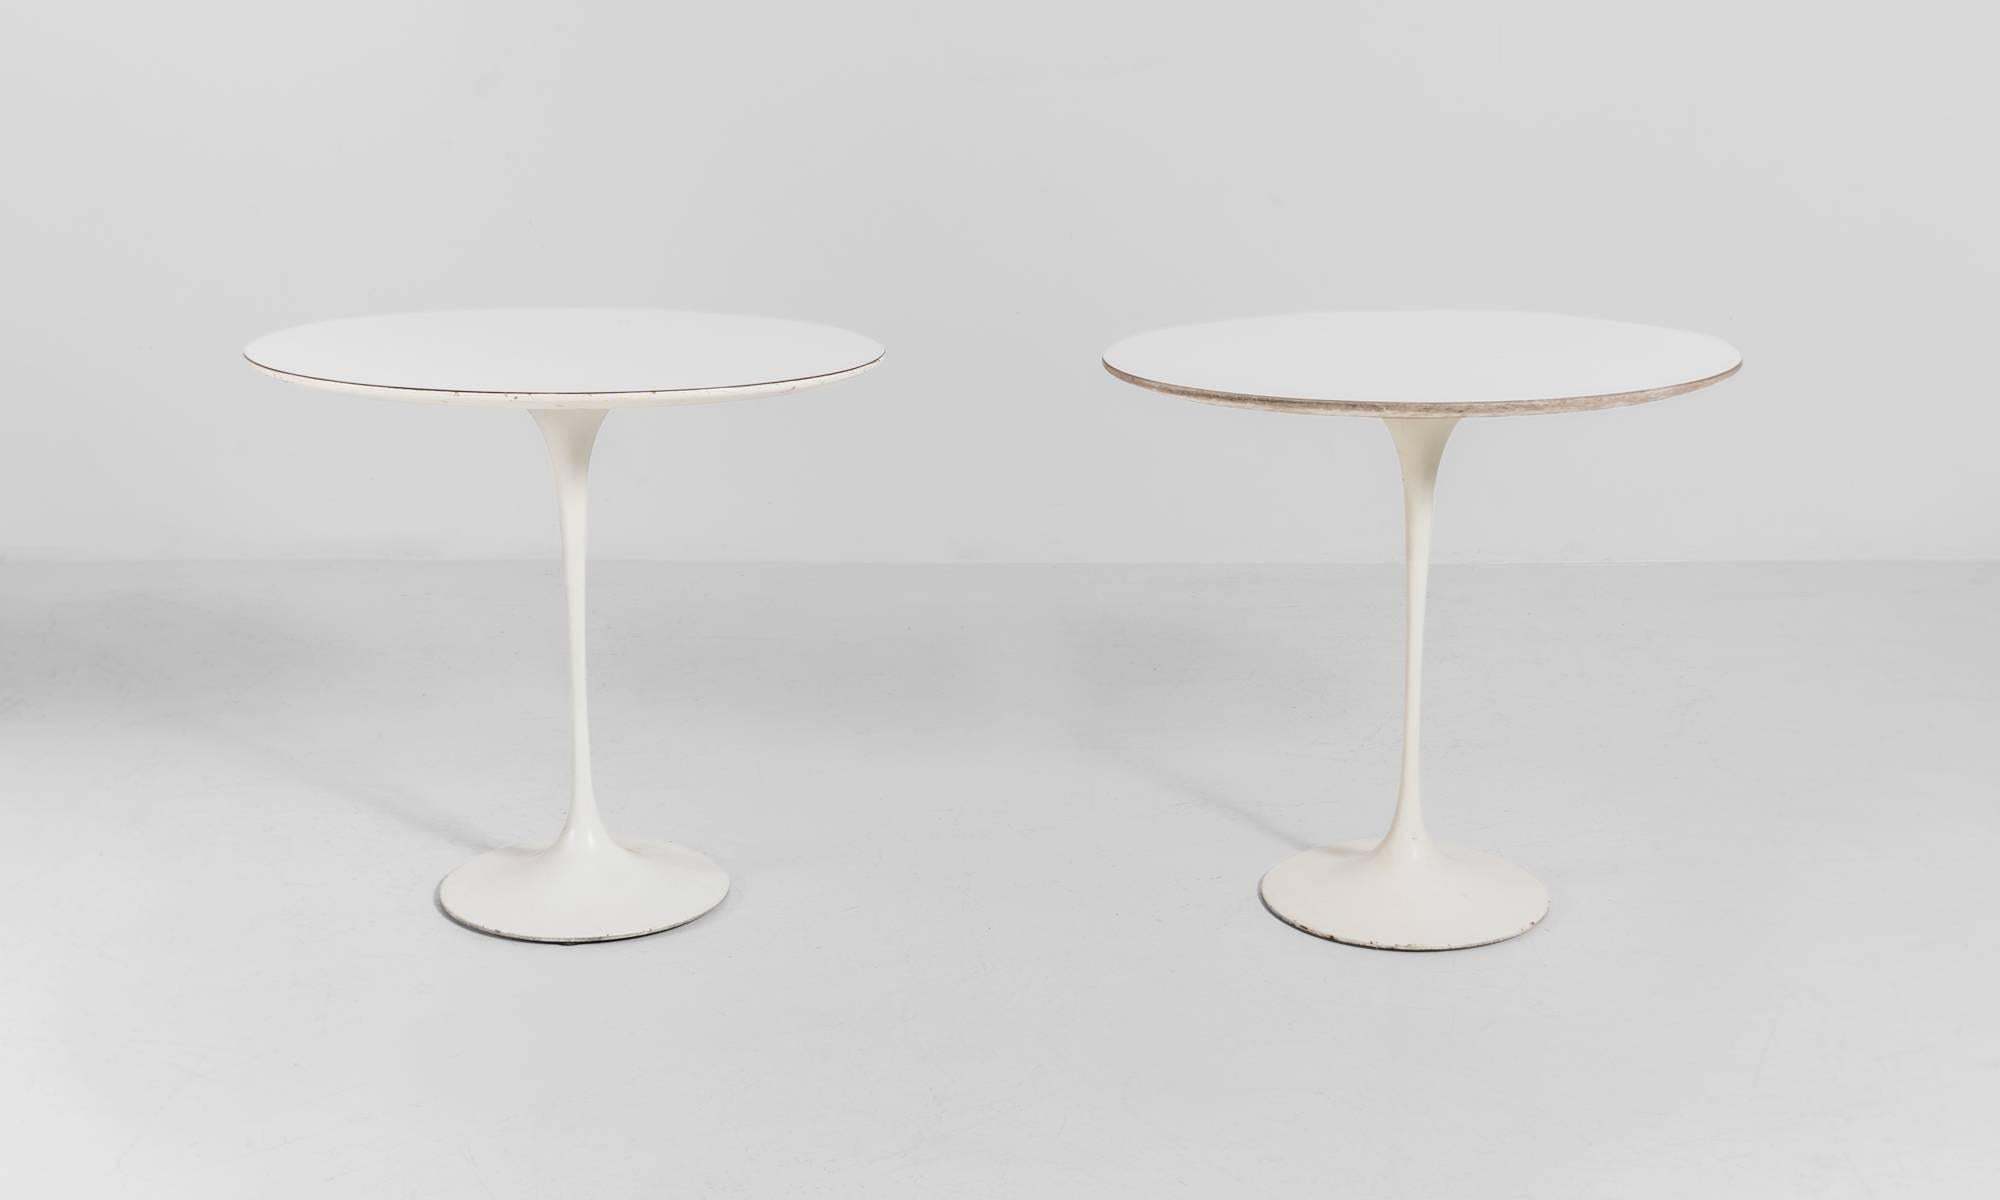 Tulip side table by Eero Saarinen designed for Knoll.